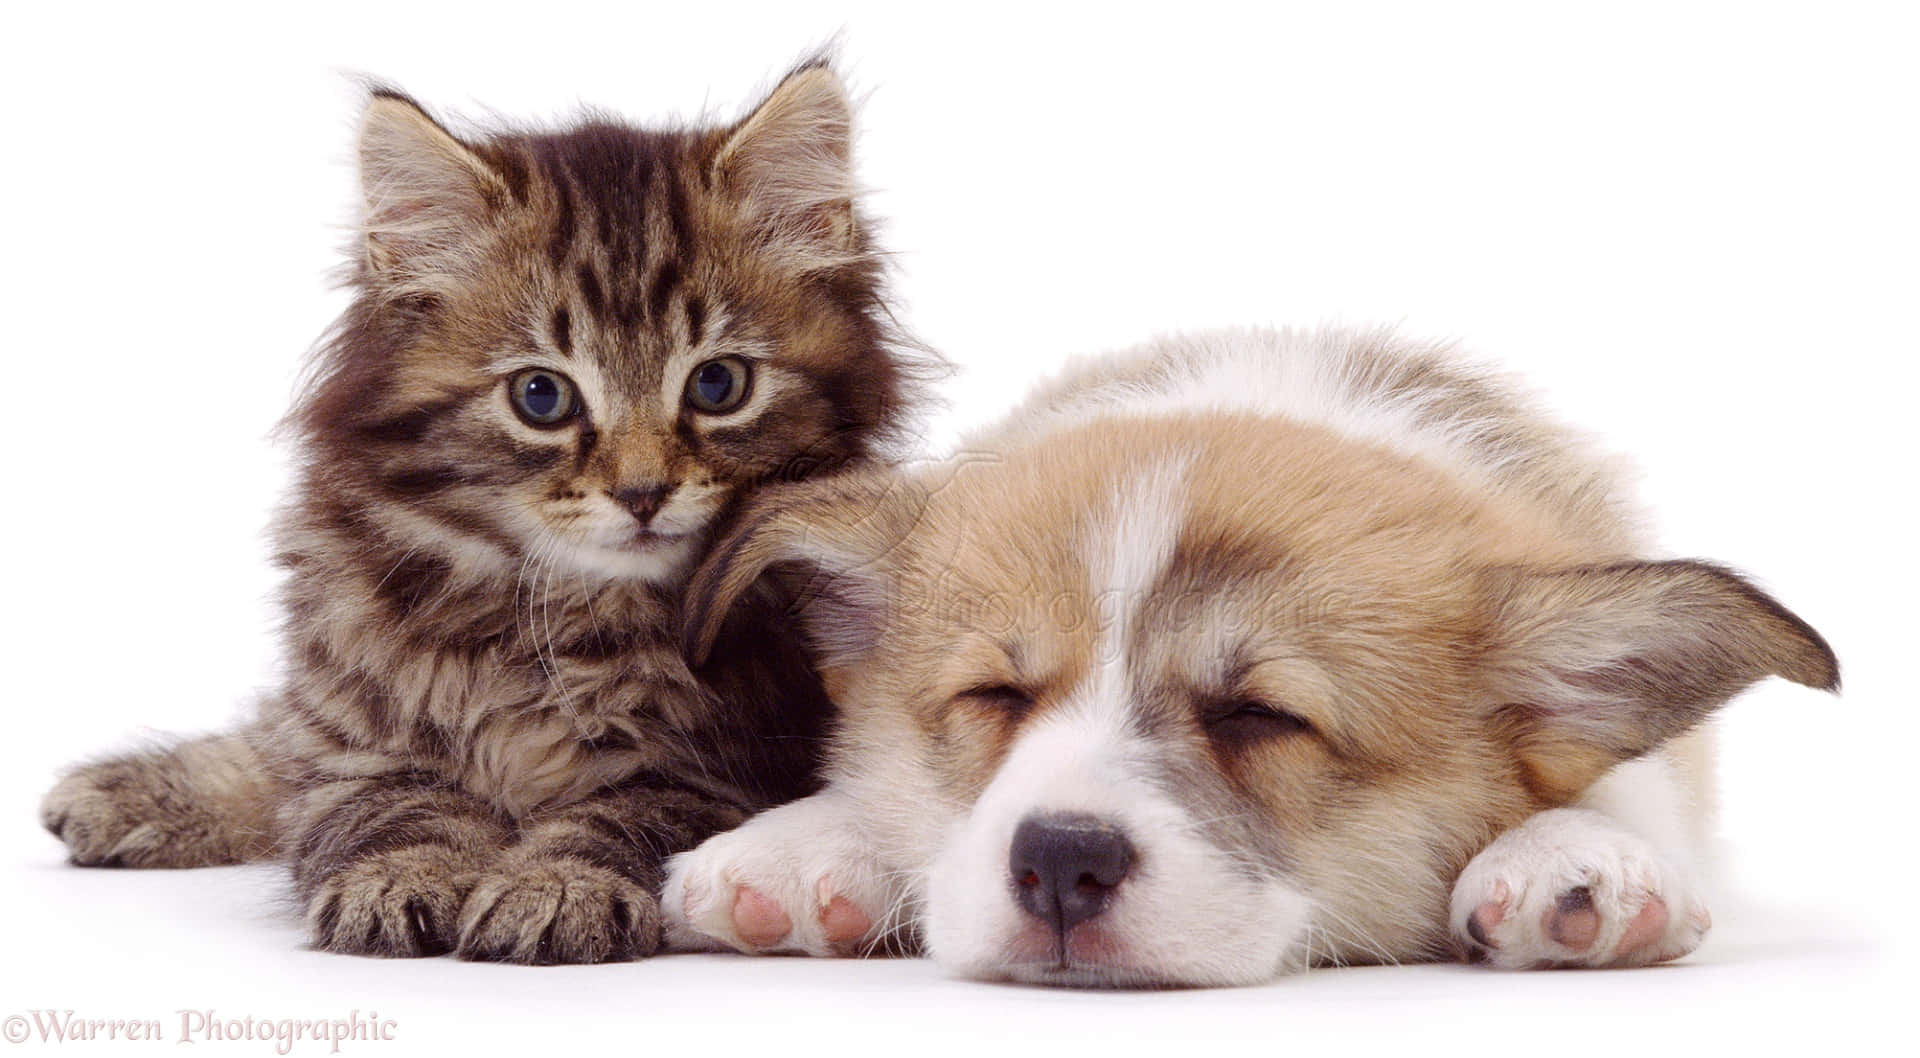 A sweet moment shared between a cuddly kitten and playful puppy Wallpaper